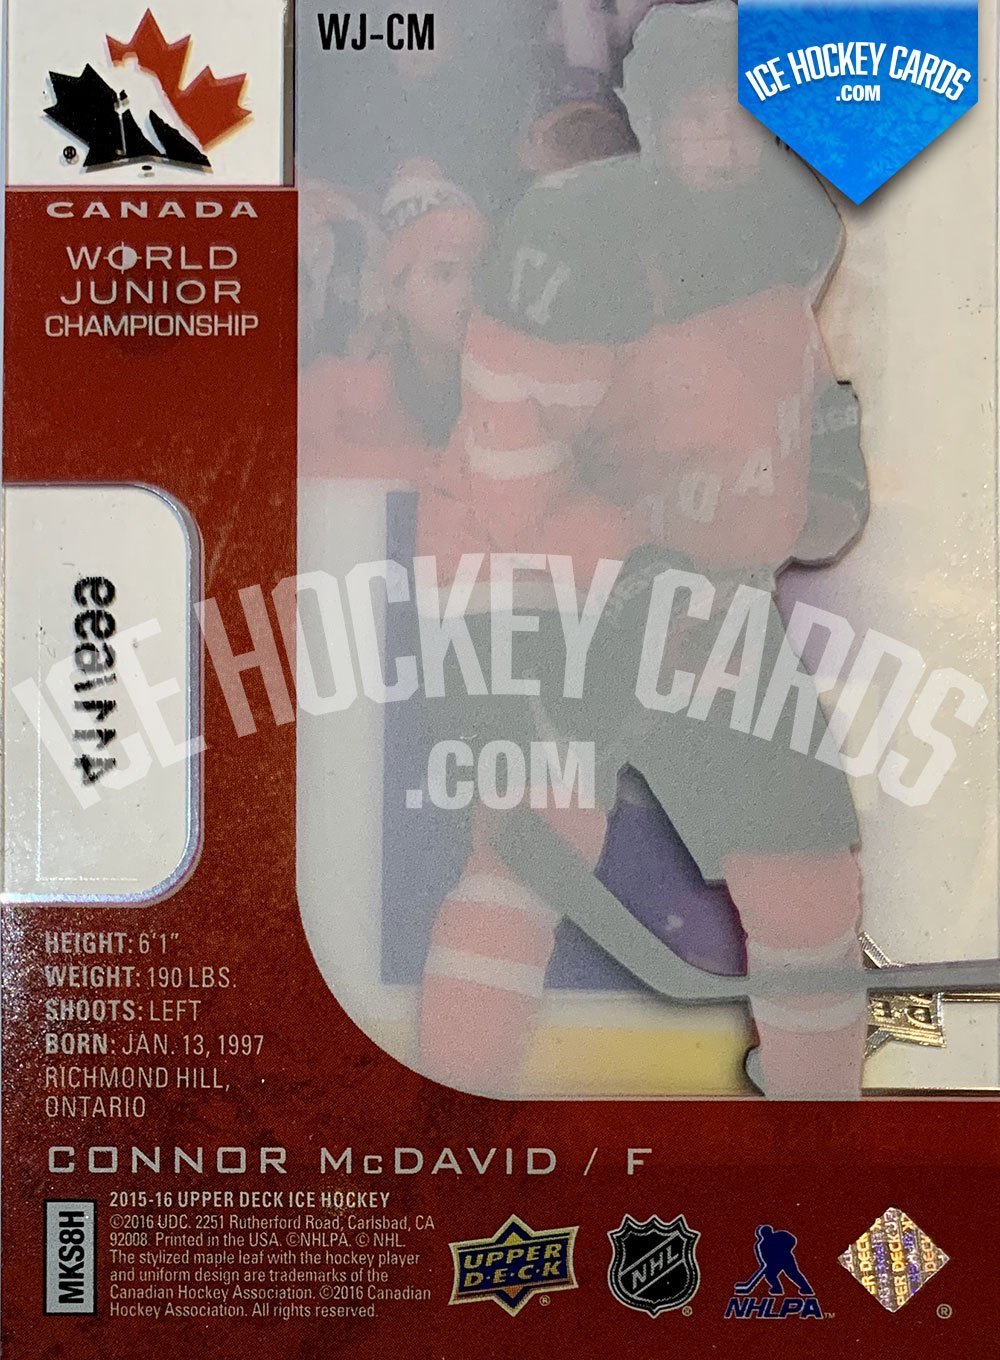 Upper Deck - ICE 2015-16 - Connor McDavid World Junior Championship Team Canada - NHL rookie year hockey card! back